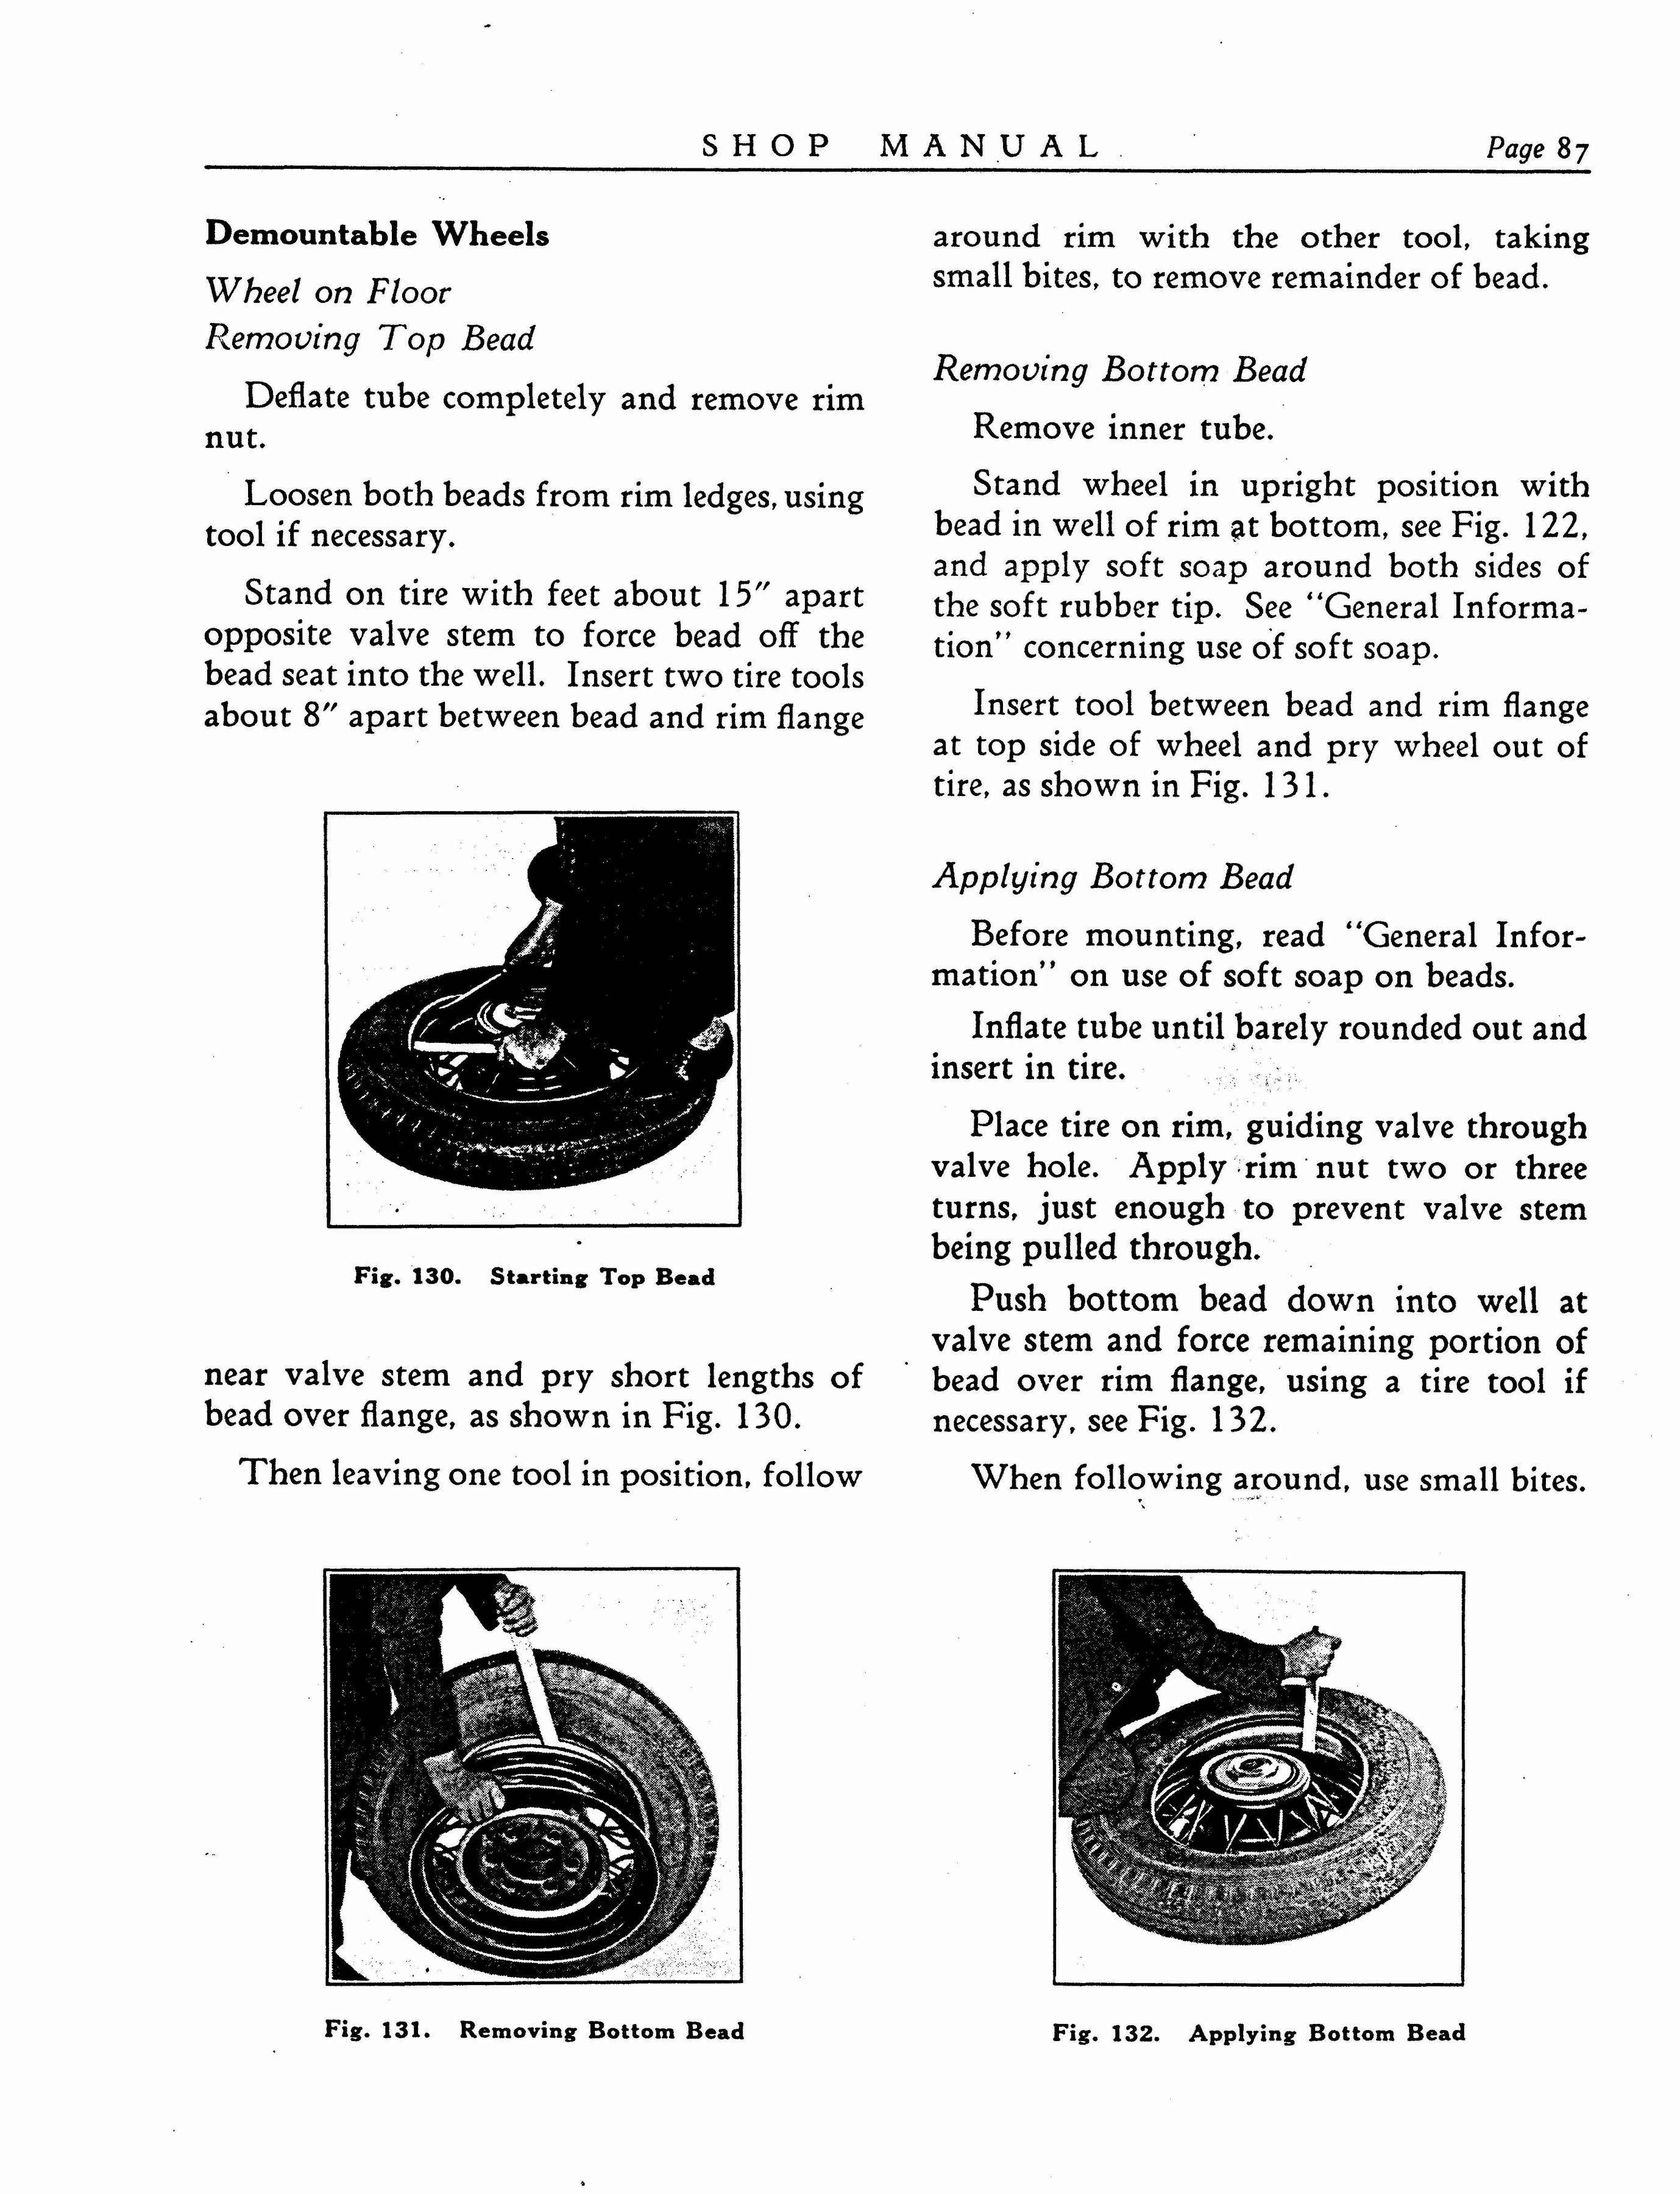 n_1933 Buick Shop Manual_Page_088.jpg